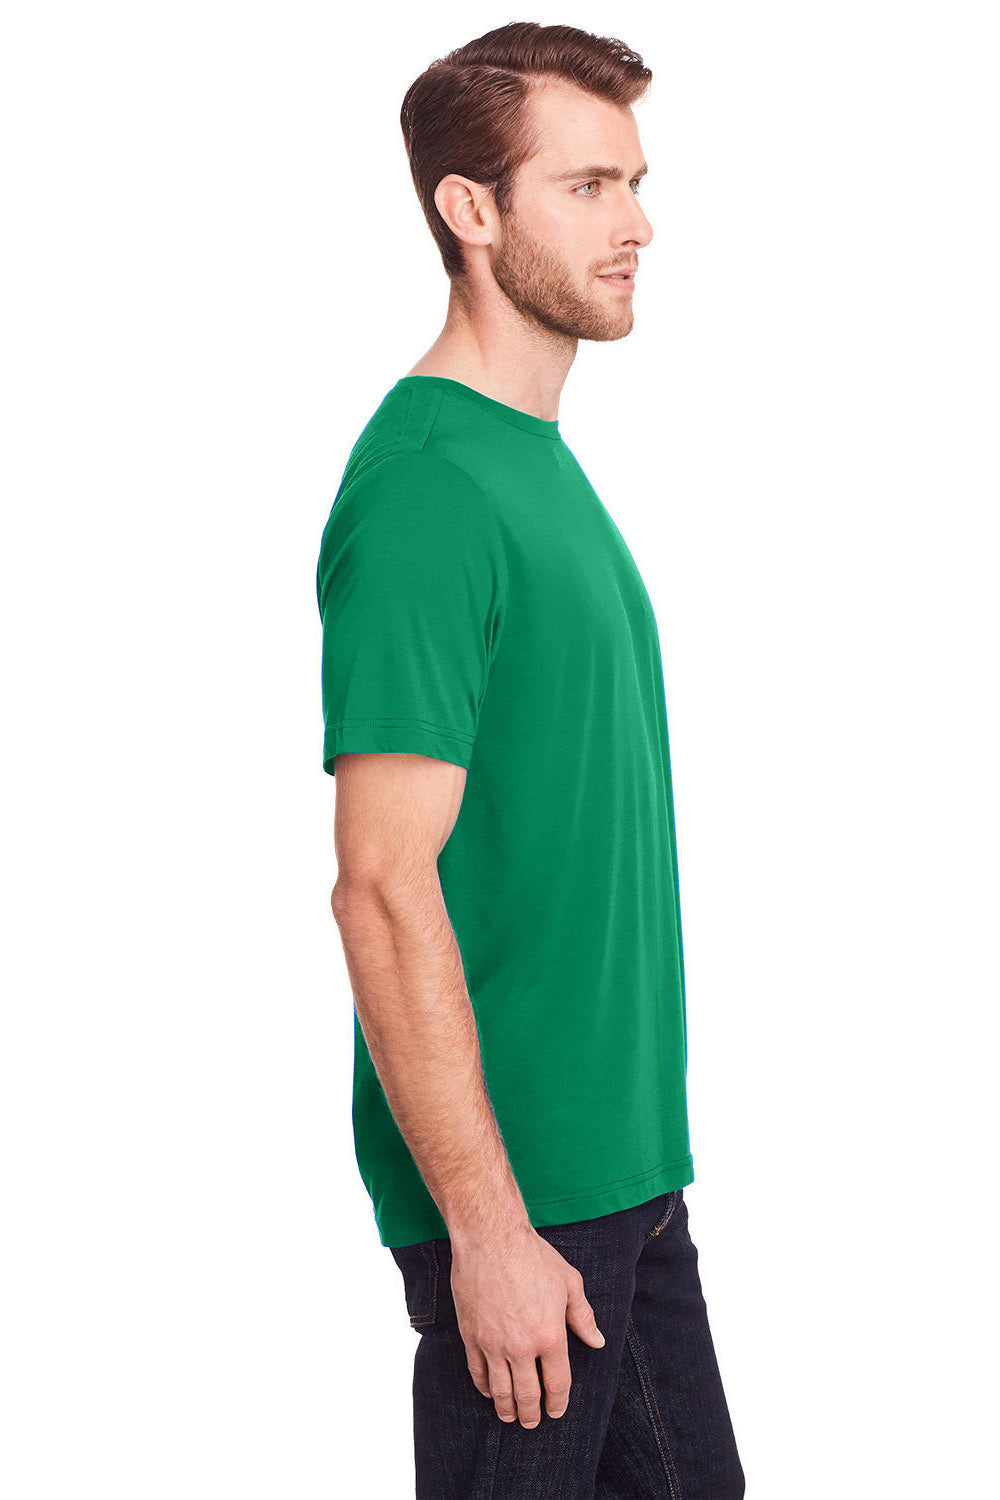 Core 365 CE111 Mens Fusion ChromaSoft Performance Moisture Wicking Short Sleeve Crewneck T-Shirt Kelly Green SIde